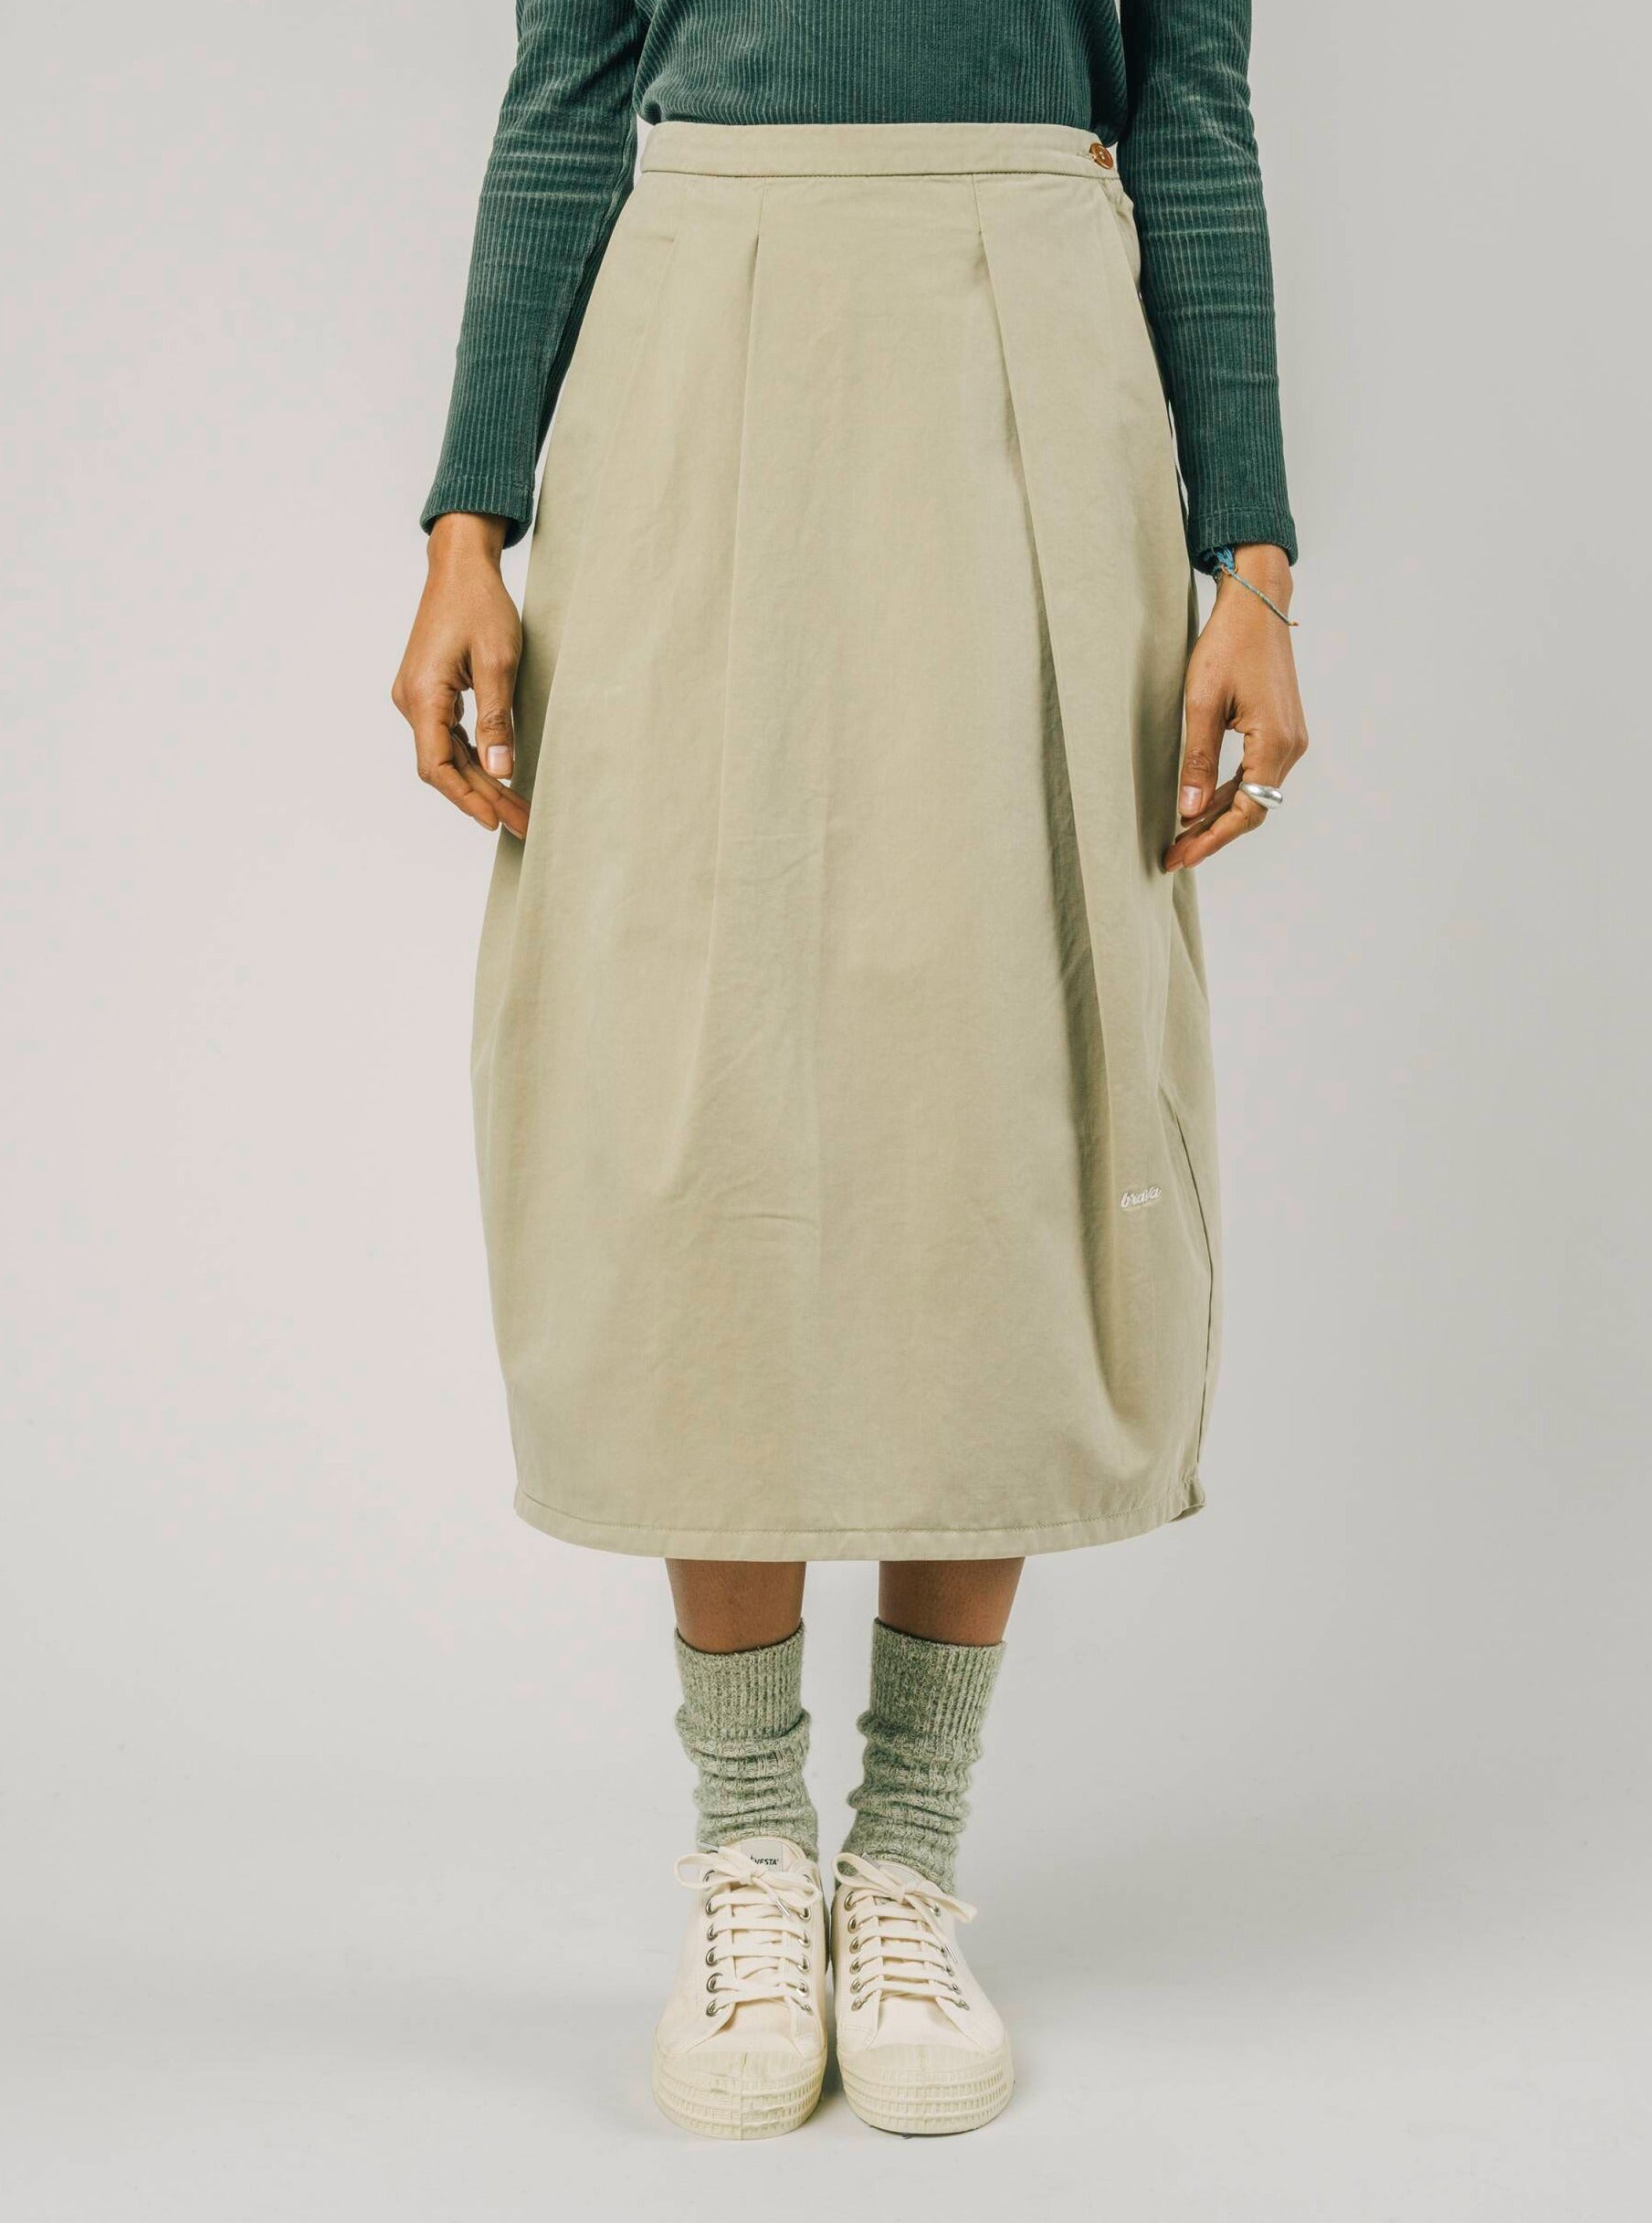 Brava Fabrics faldas Falda Plisada XS Beige de Algodón Orgánico moda sostenible moda ética